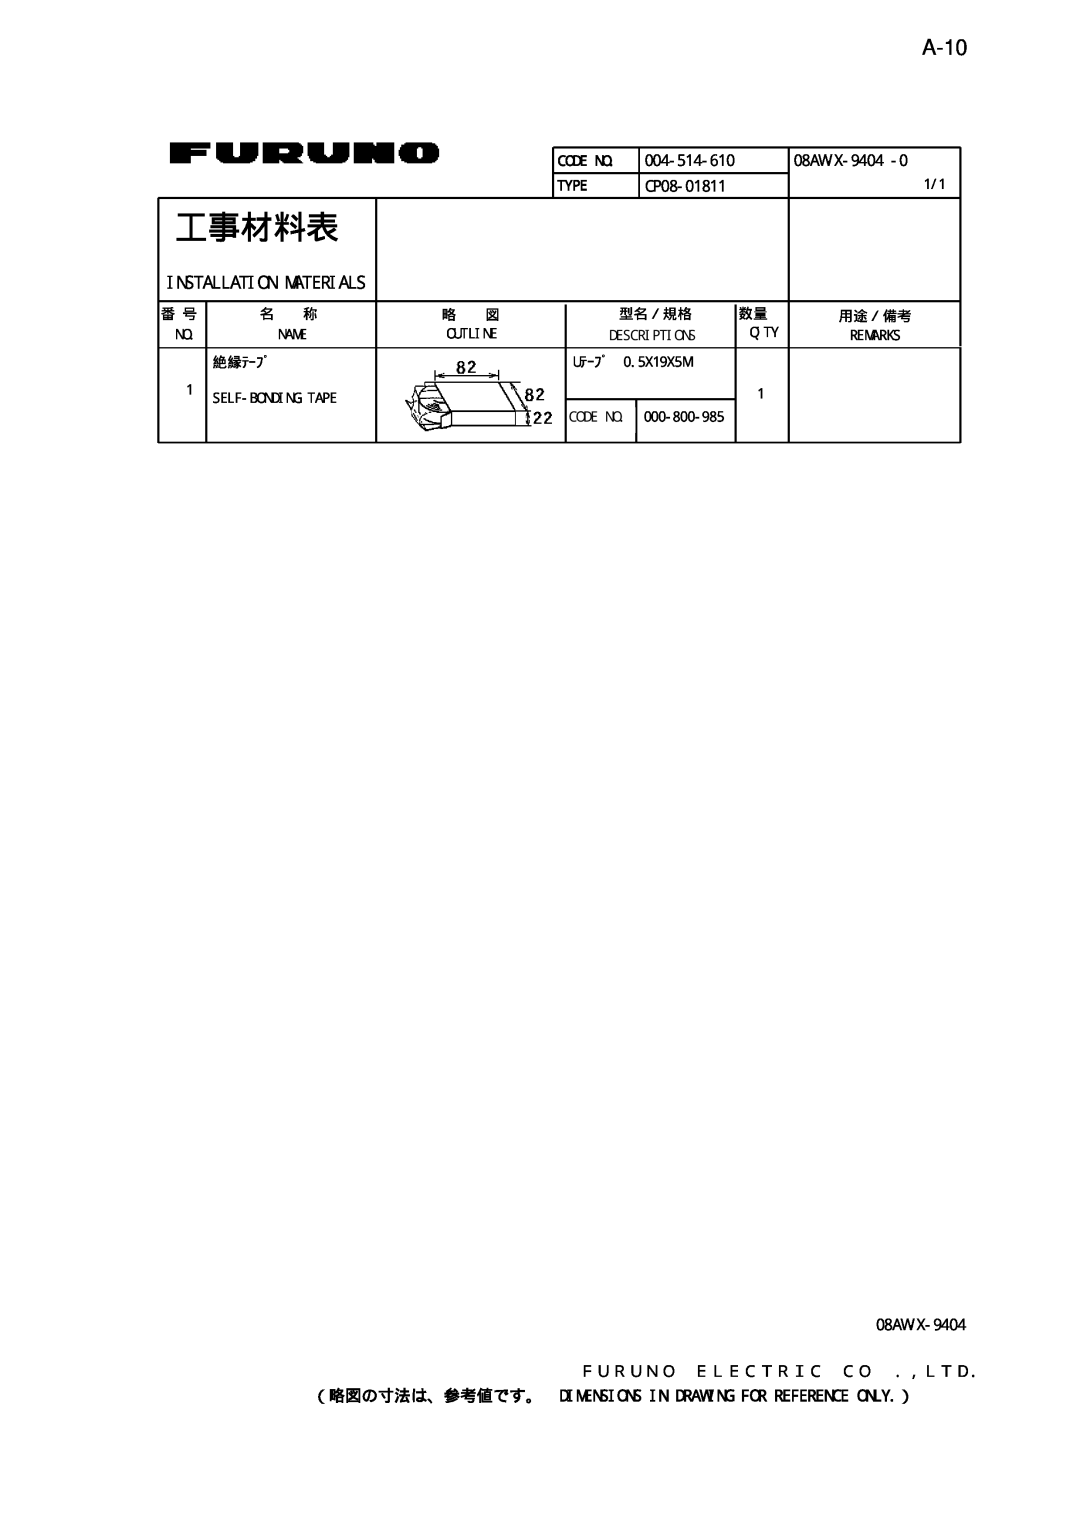 Furuno NX-700B manual A-10, 工事材料表, 004-514-610, 08AW-X-9404, CP08-01811, Installation Materials 